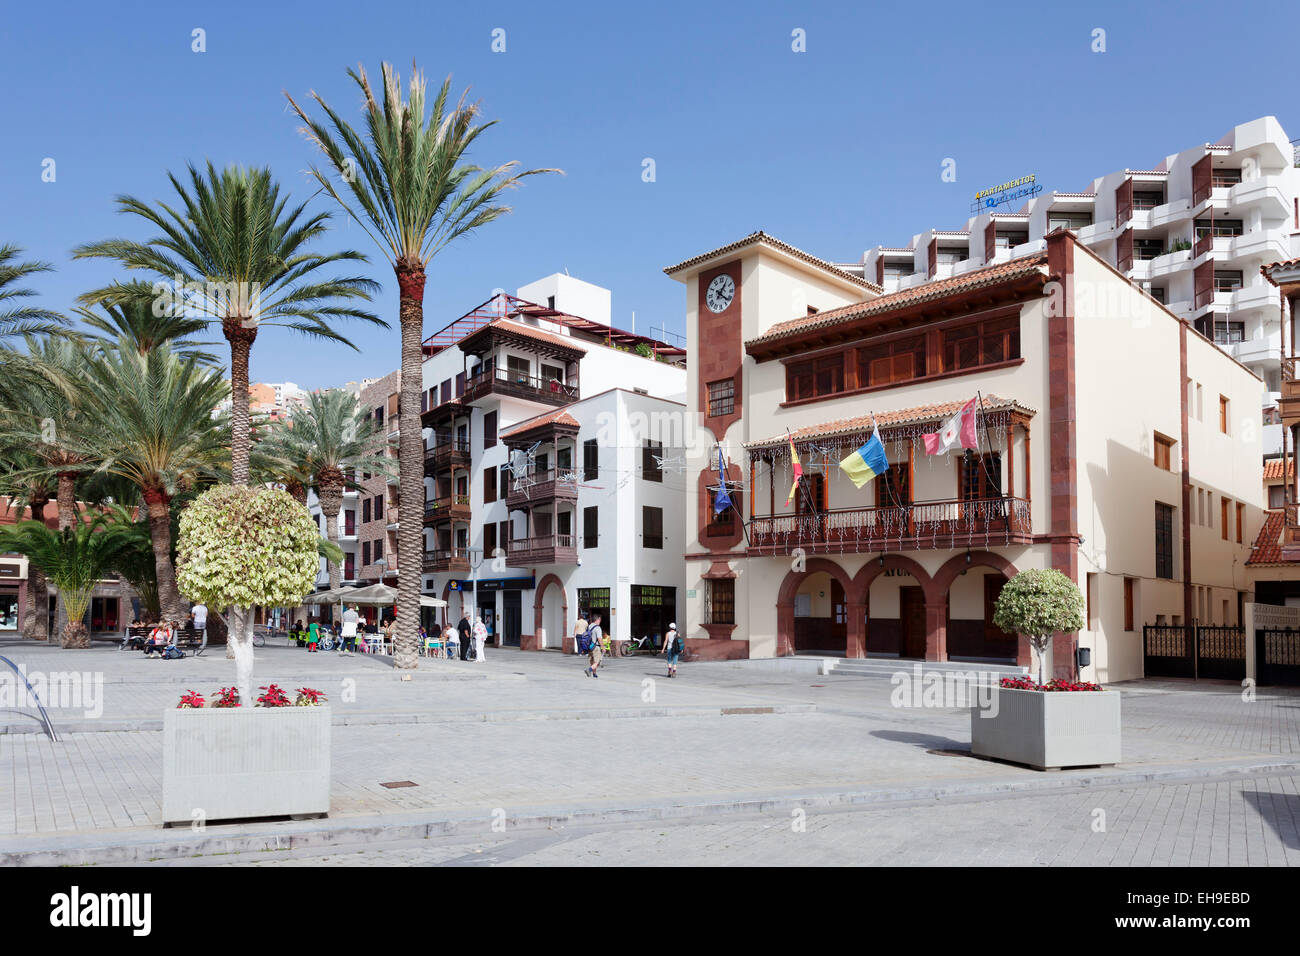 Town Hall in Plaza de las Americas, San Sebastian, La Gomera, Canary Islands, Spain Stock Photo